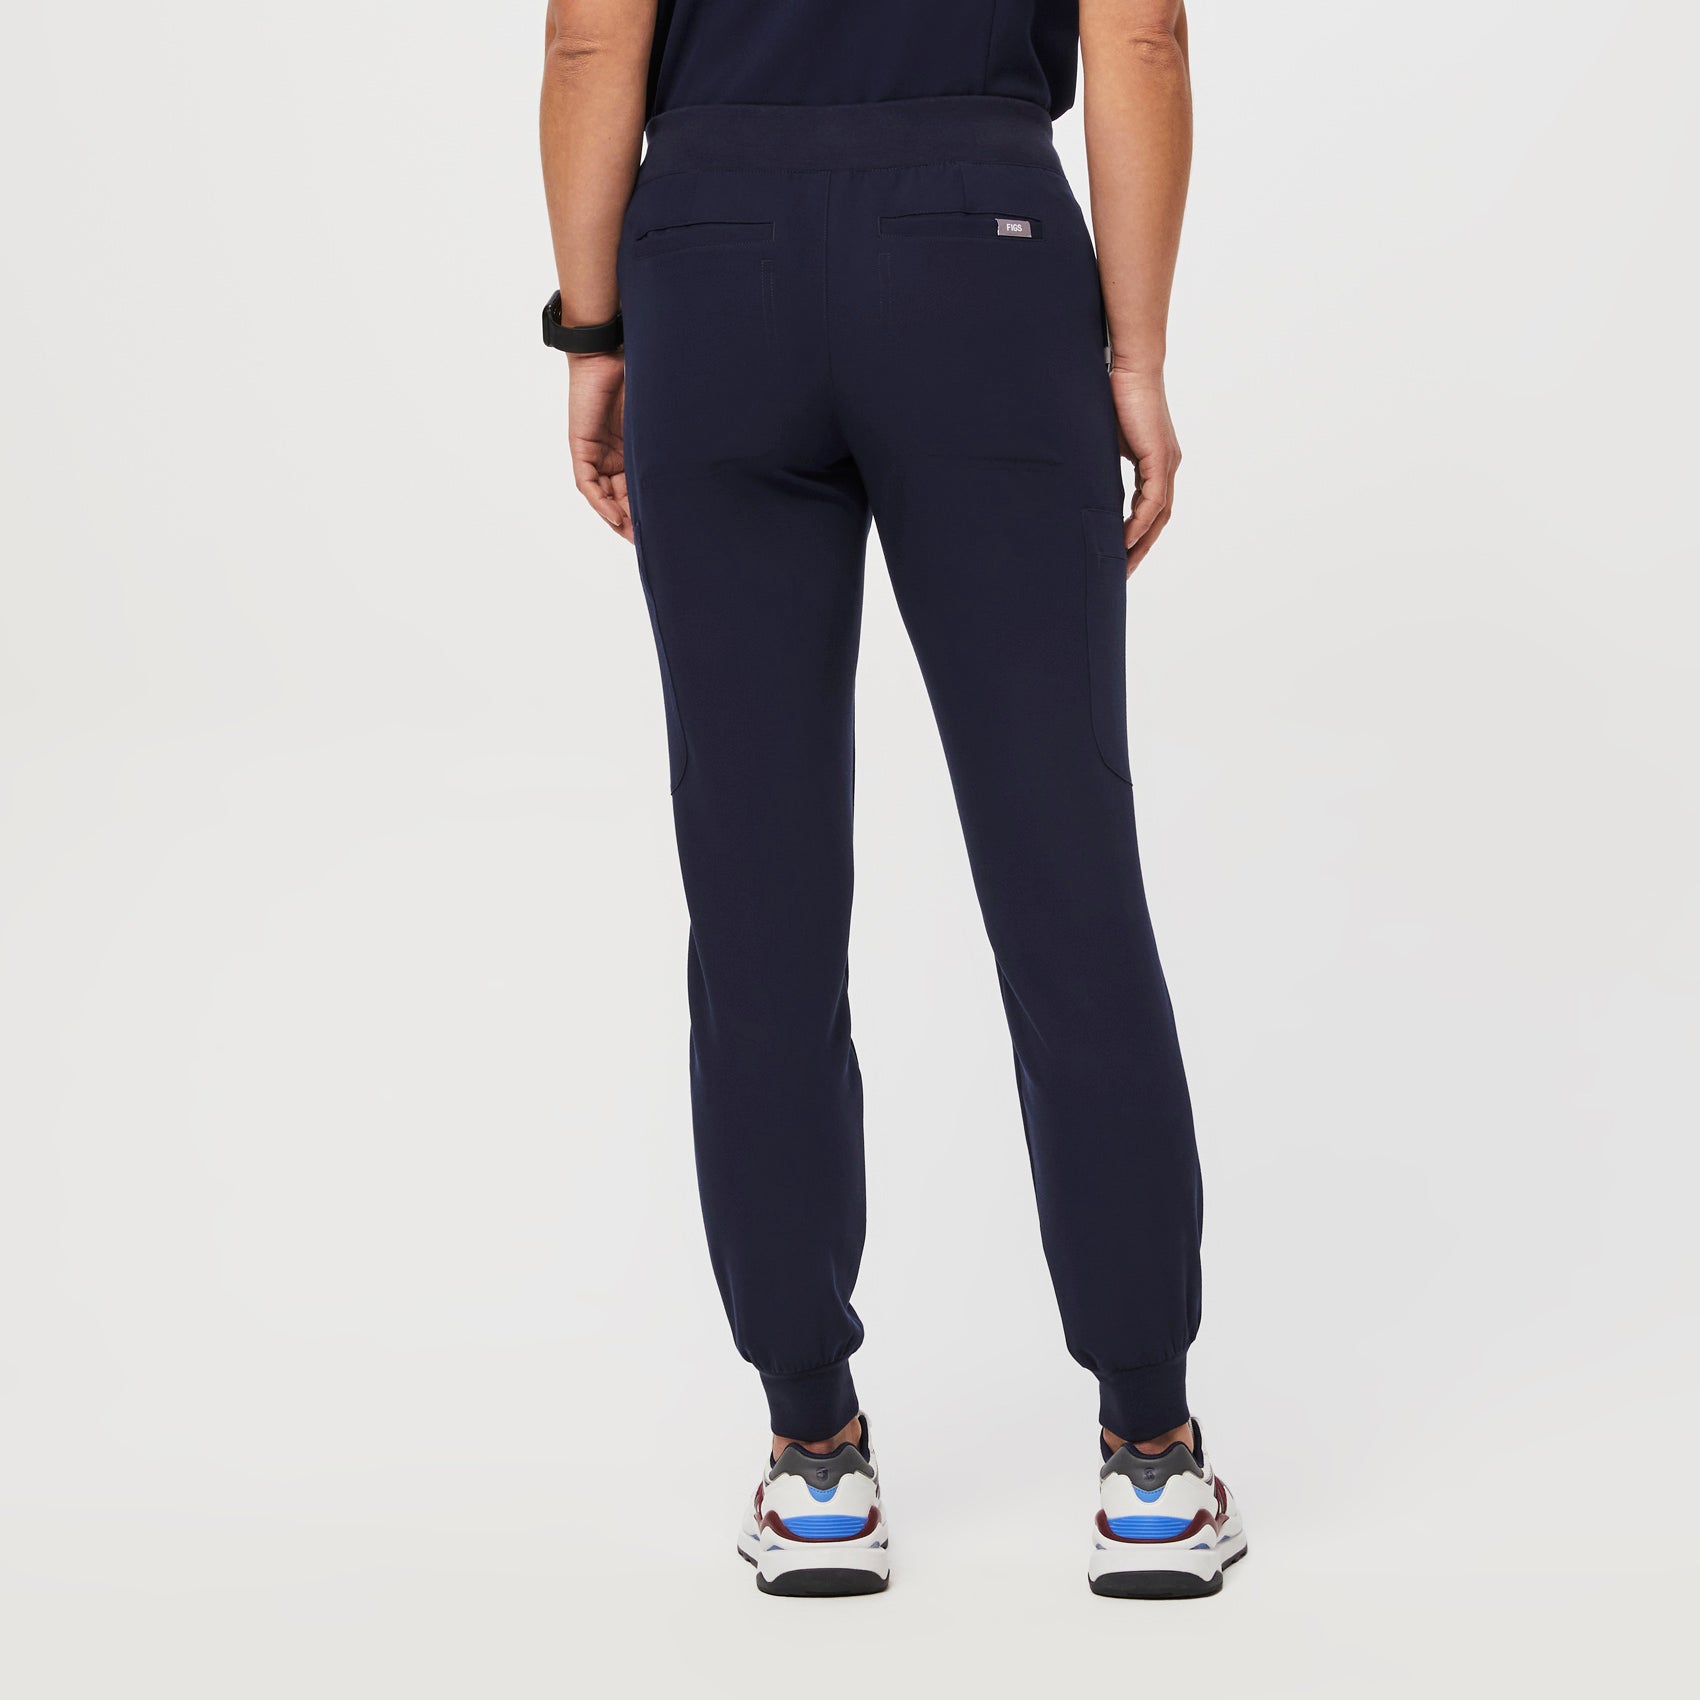 Pantalón deportivo de uniforme médico Muoy para mujer - Azul marino · FIGS